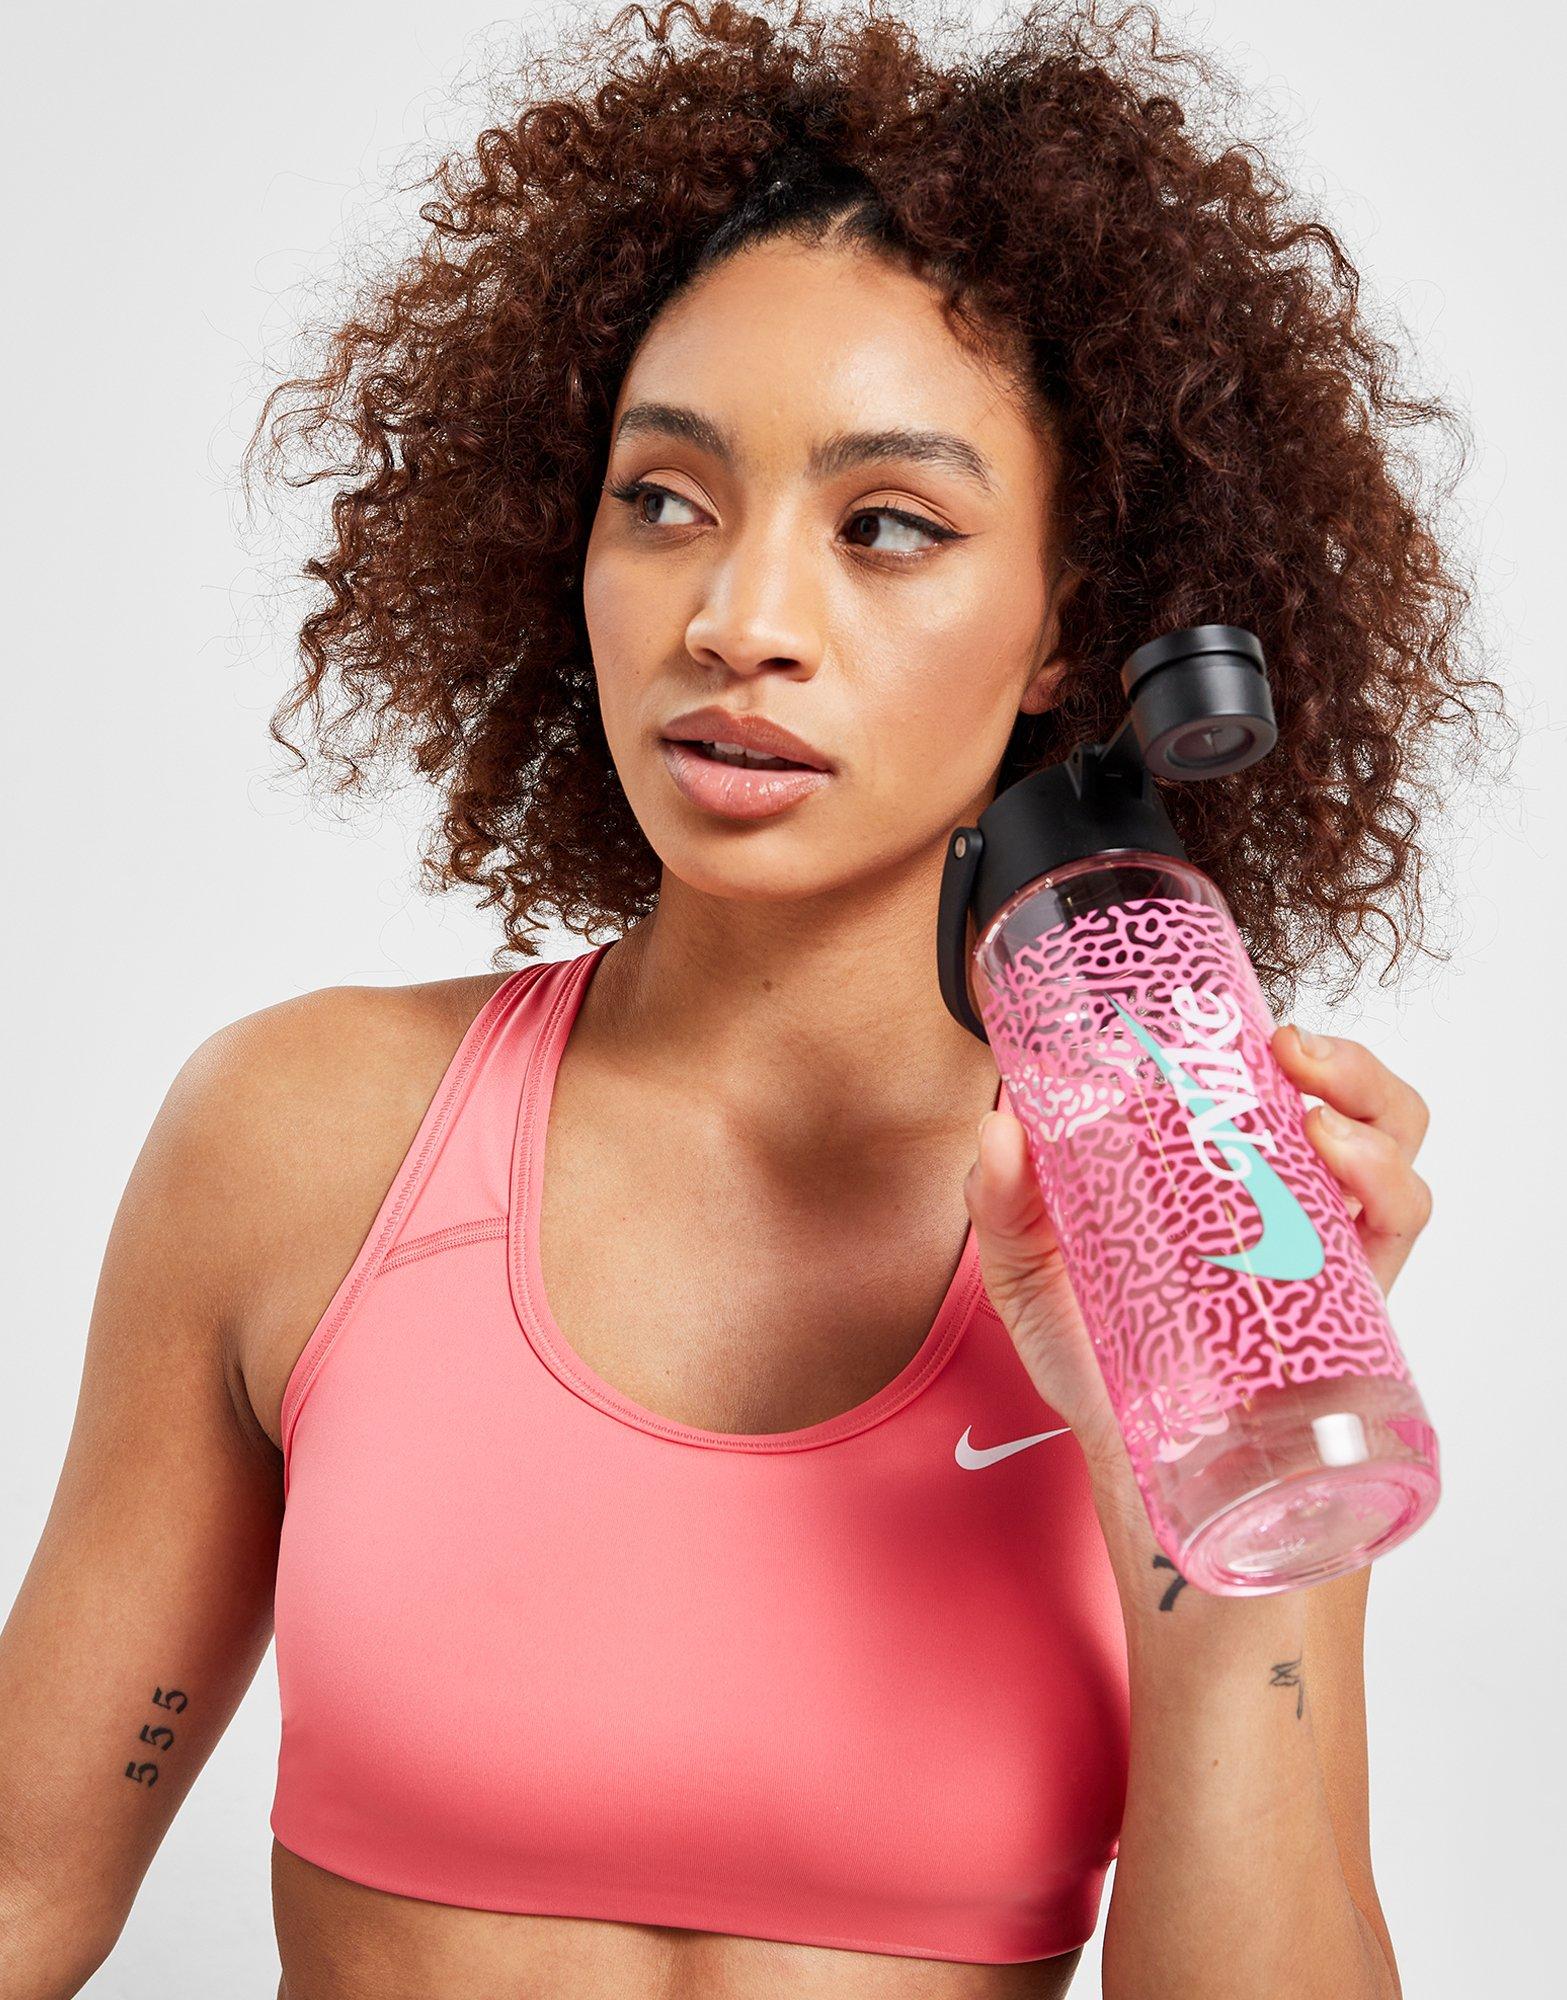 Nike 24oz Recharge Chug Stainless Steel Water Bottle